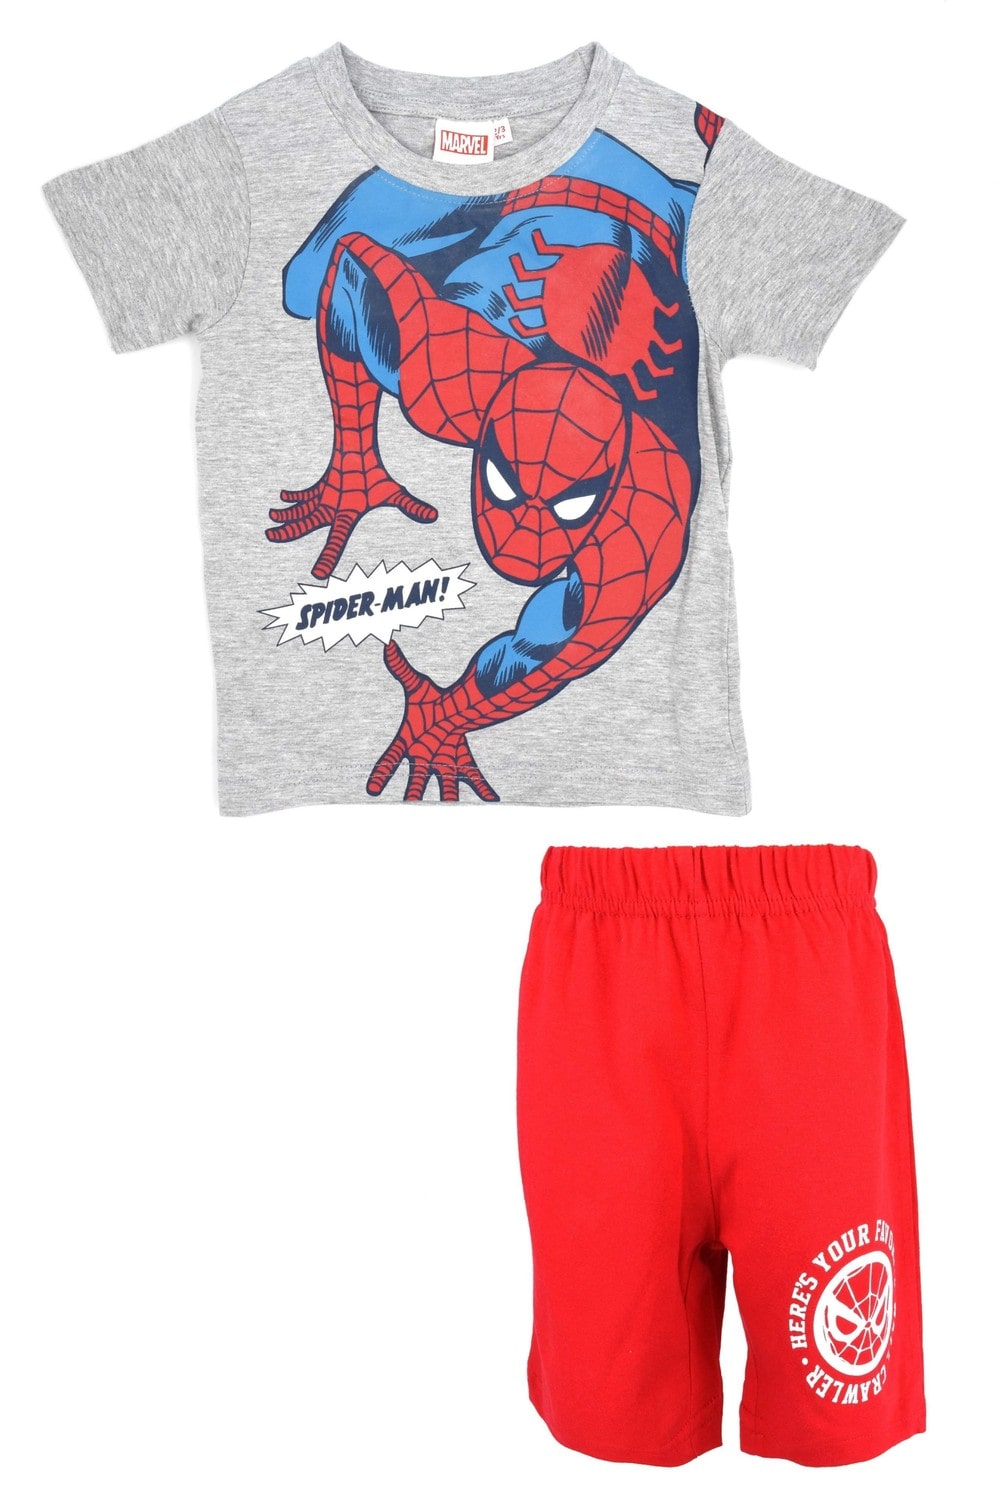 Spiderman Marvel®️ Character Boys T-shirt & Short Set for Kids Marvel High quality Cool Graphic printed T-Shirt & Short Set - Dealz Souq